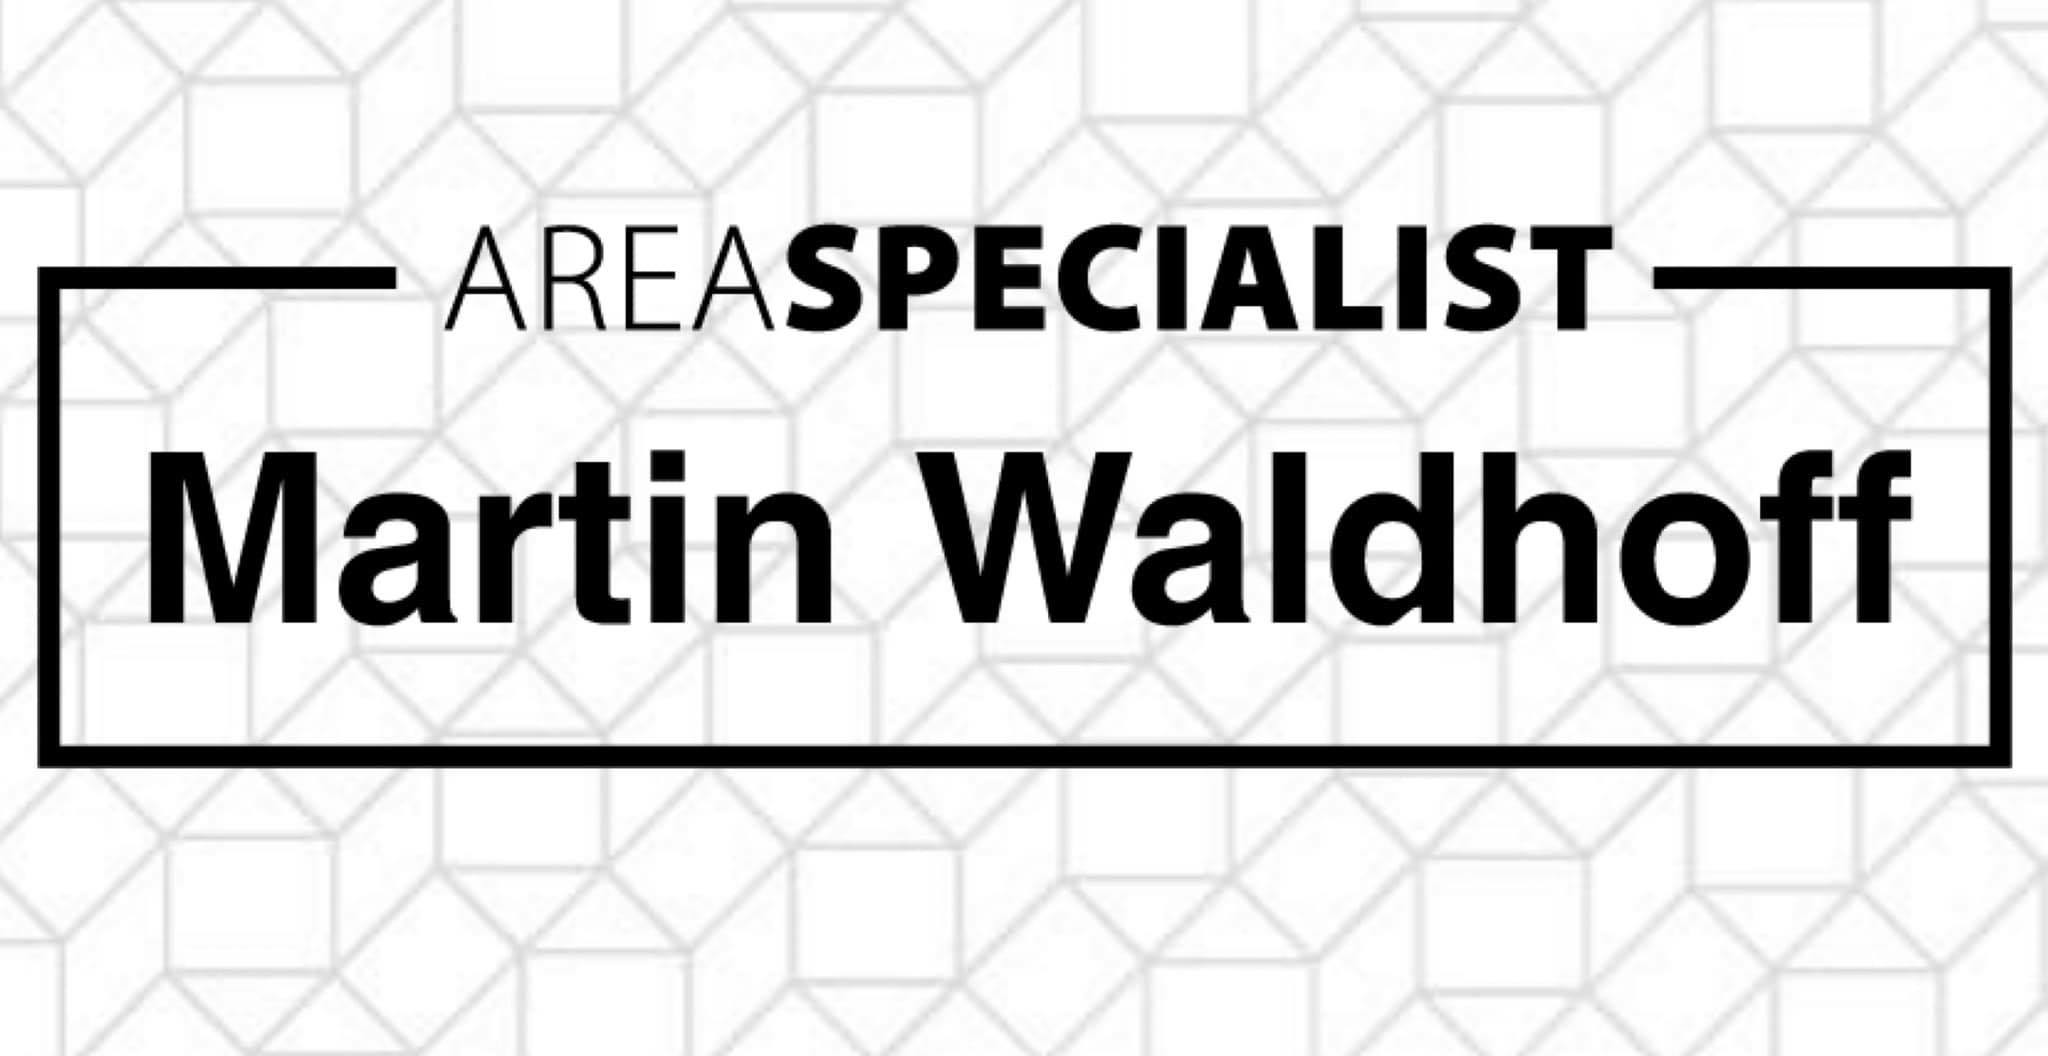 Martin Waldhoff Area Specialist